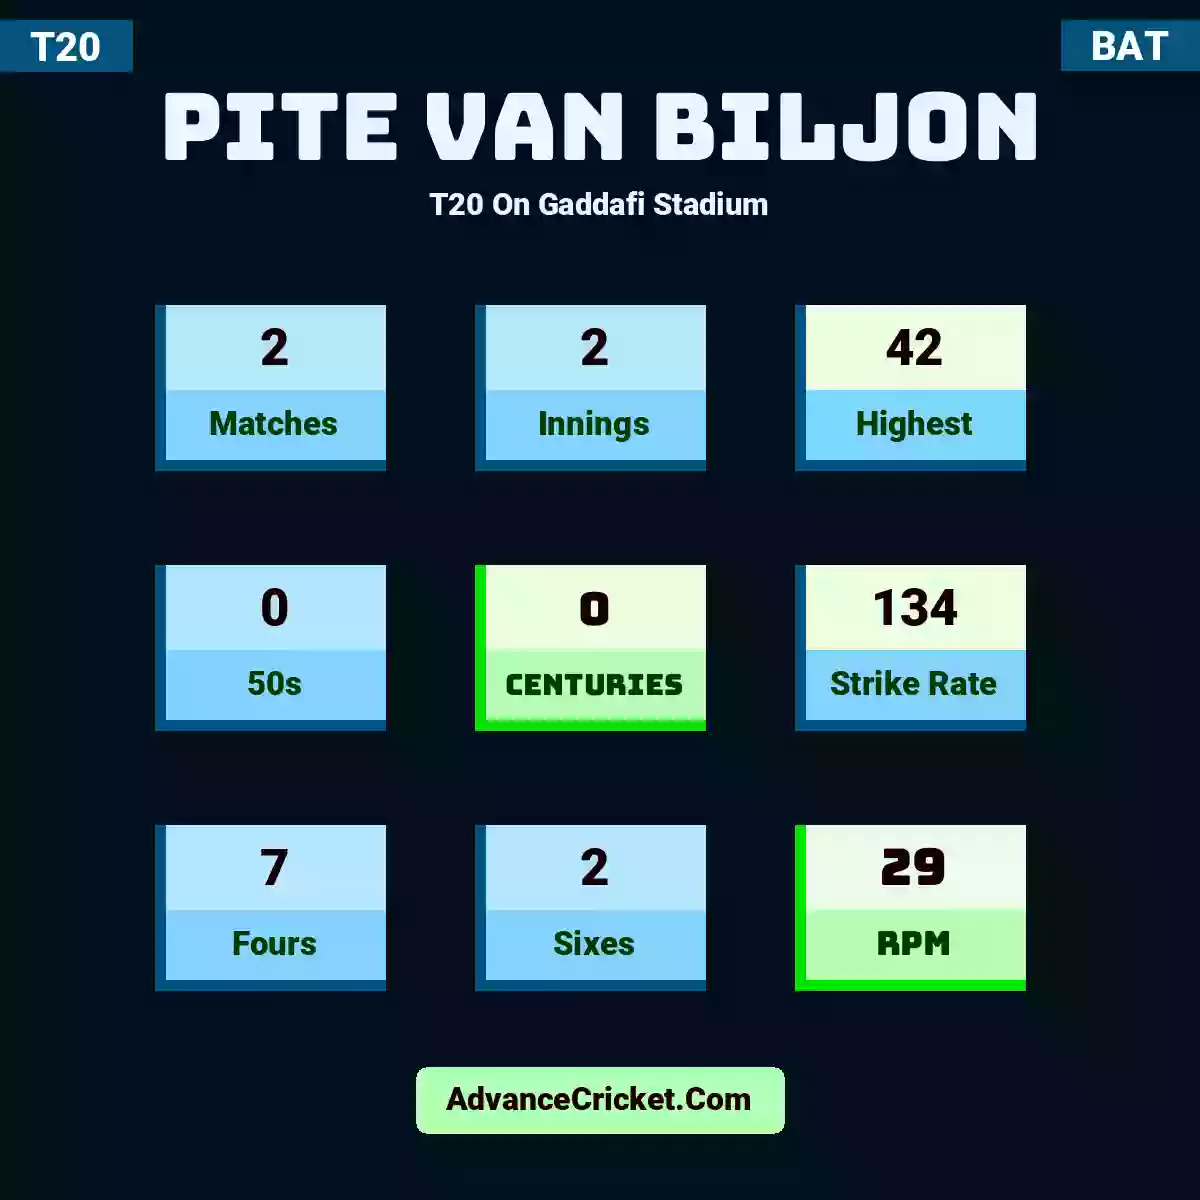 Pite van Biljon T20  On Gaddafi Stadium, Pite van Biljon played 2 matches, scored 42 runs as highest, 0 half-centuries, and 0 centuries, with a strike rate of 134. P.van Biljon hit 7 fours and 2 sixes, with an RPM of 29.